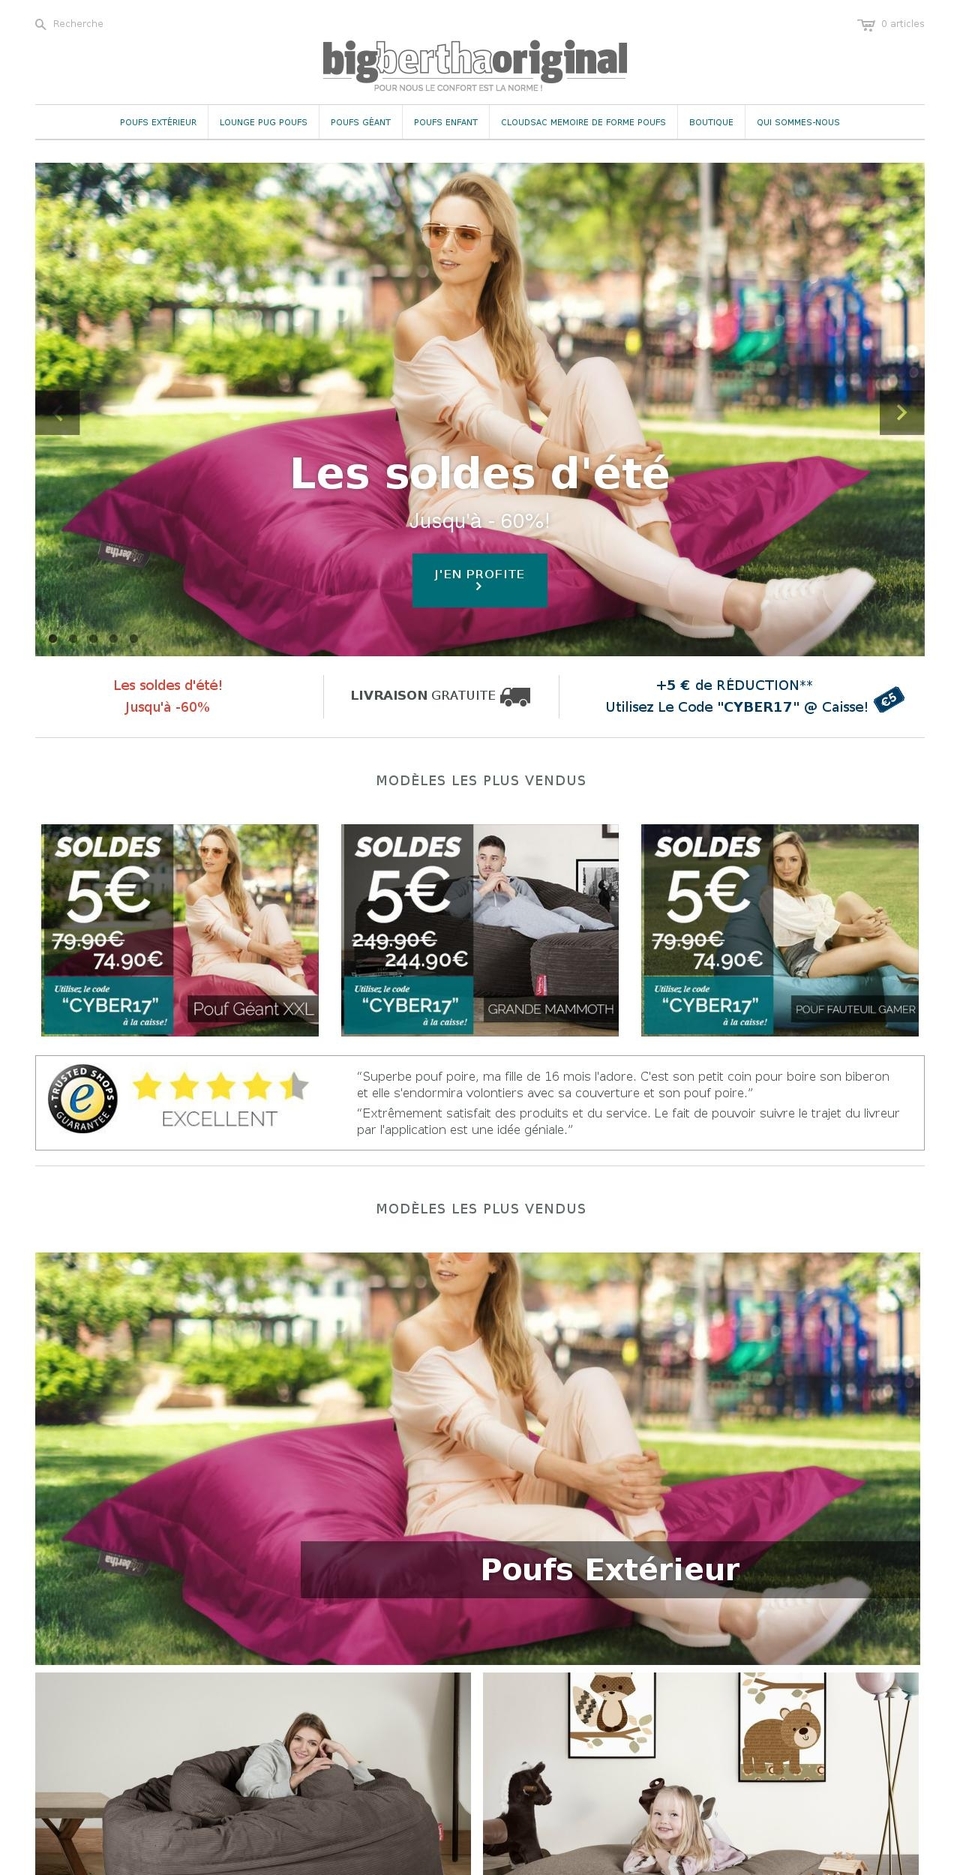 bigberthaoriginal.fr shopify website screenshot